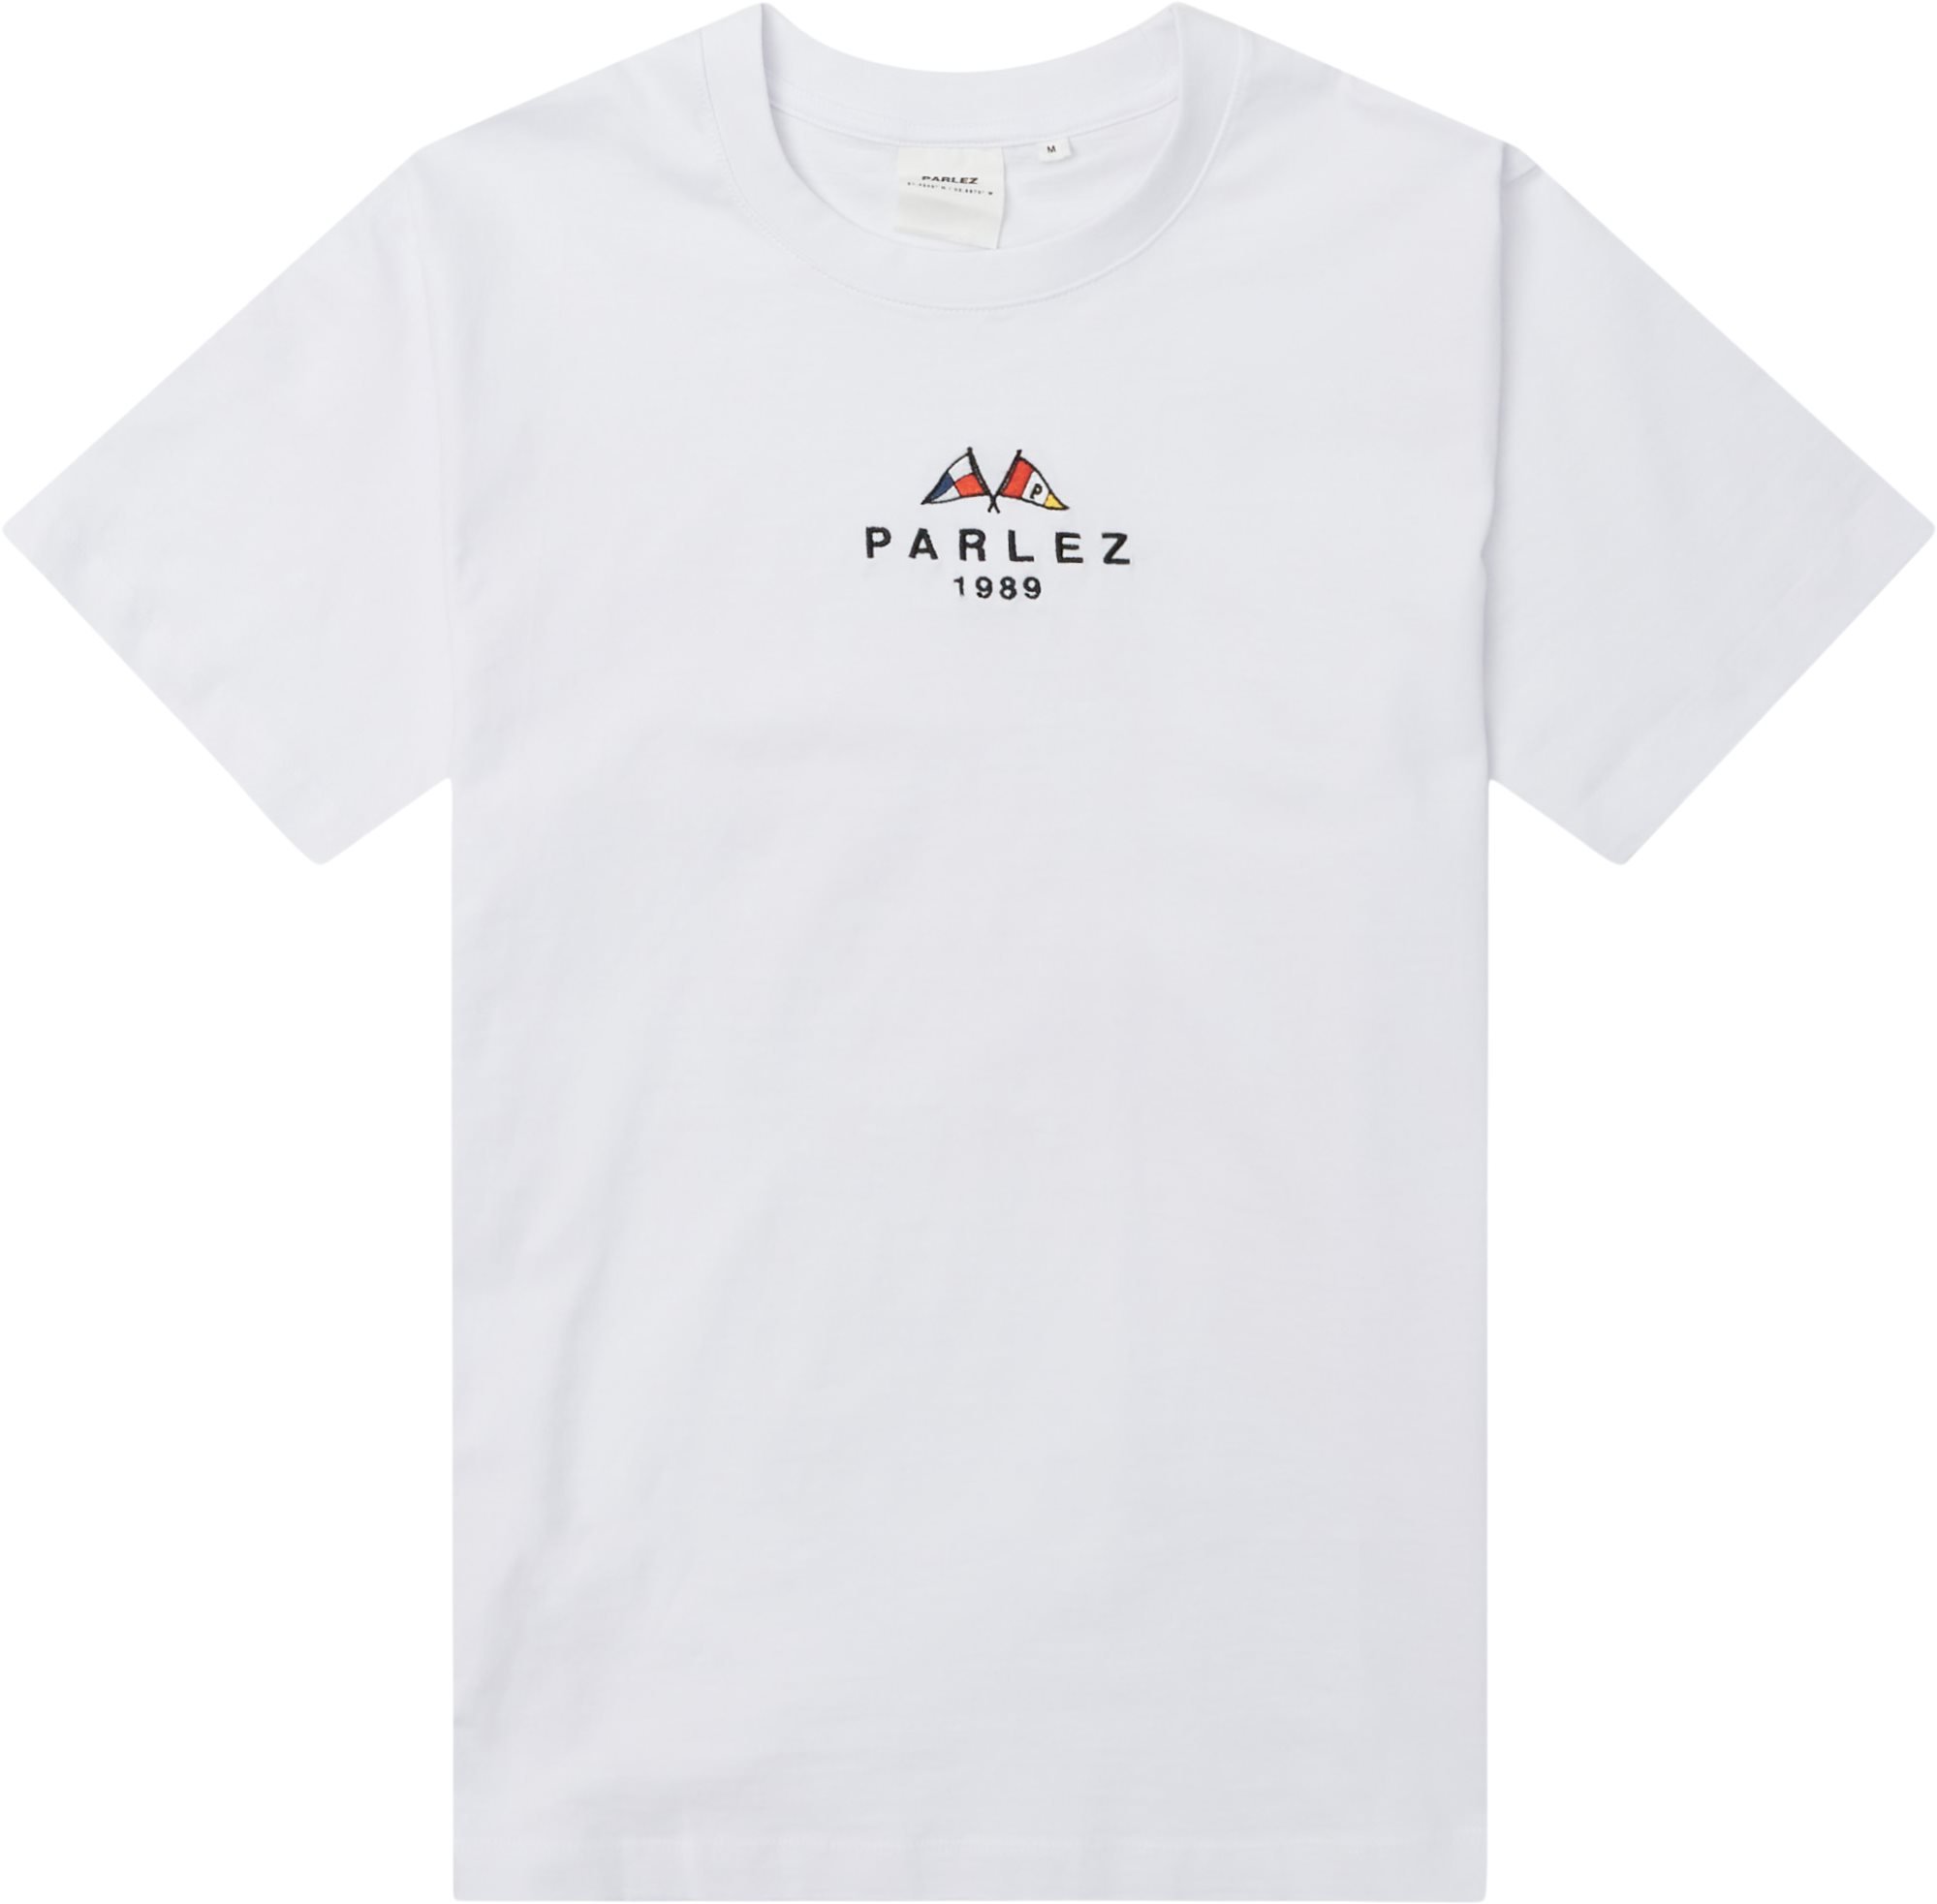 Iroko Tee - T-shirts - Regular fit - Vit